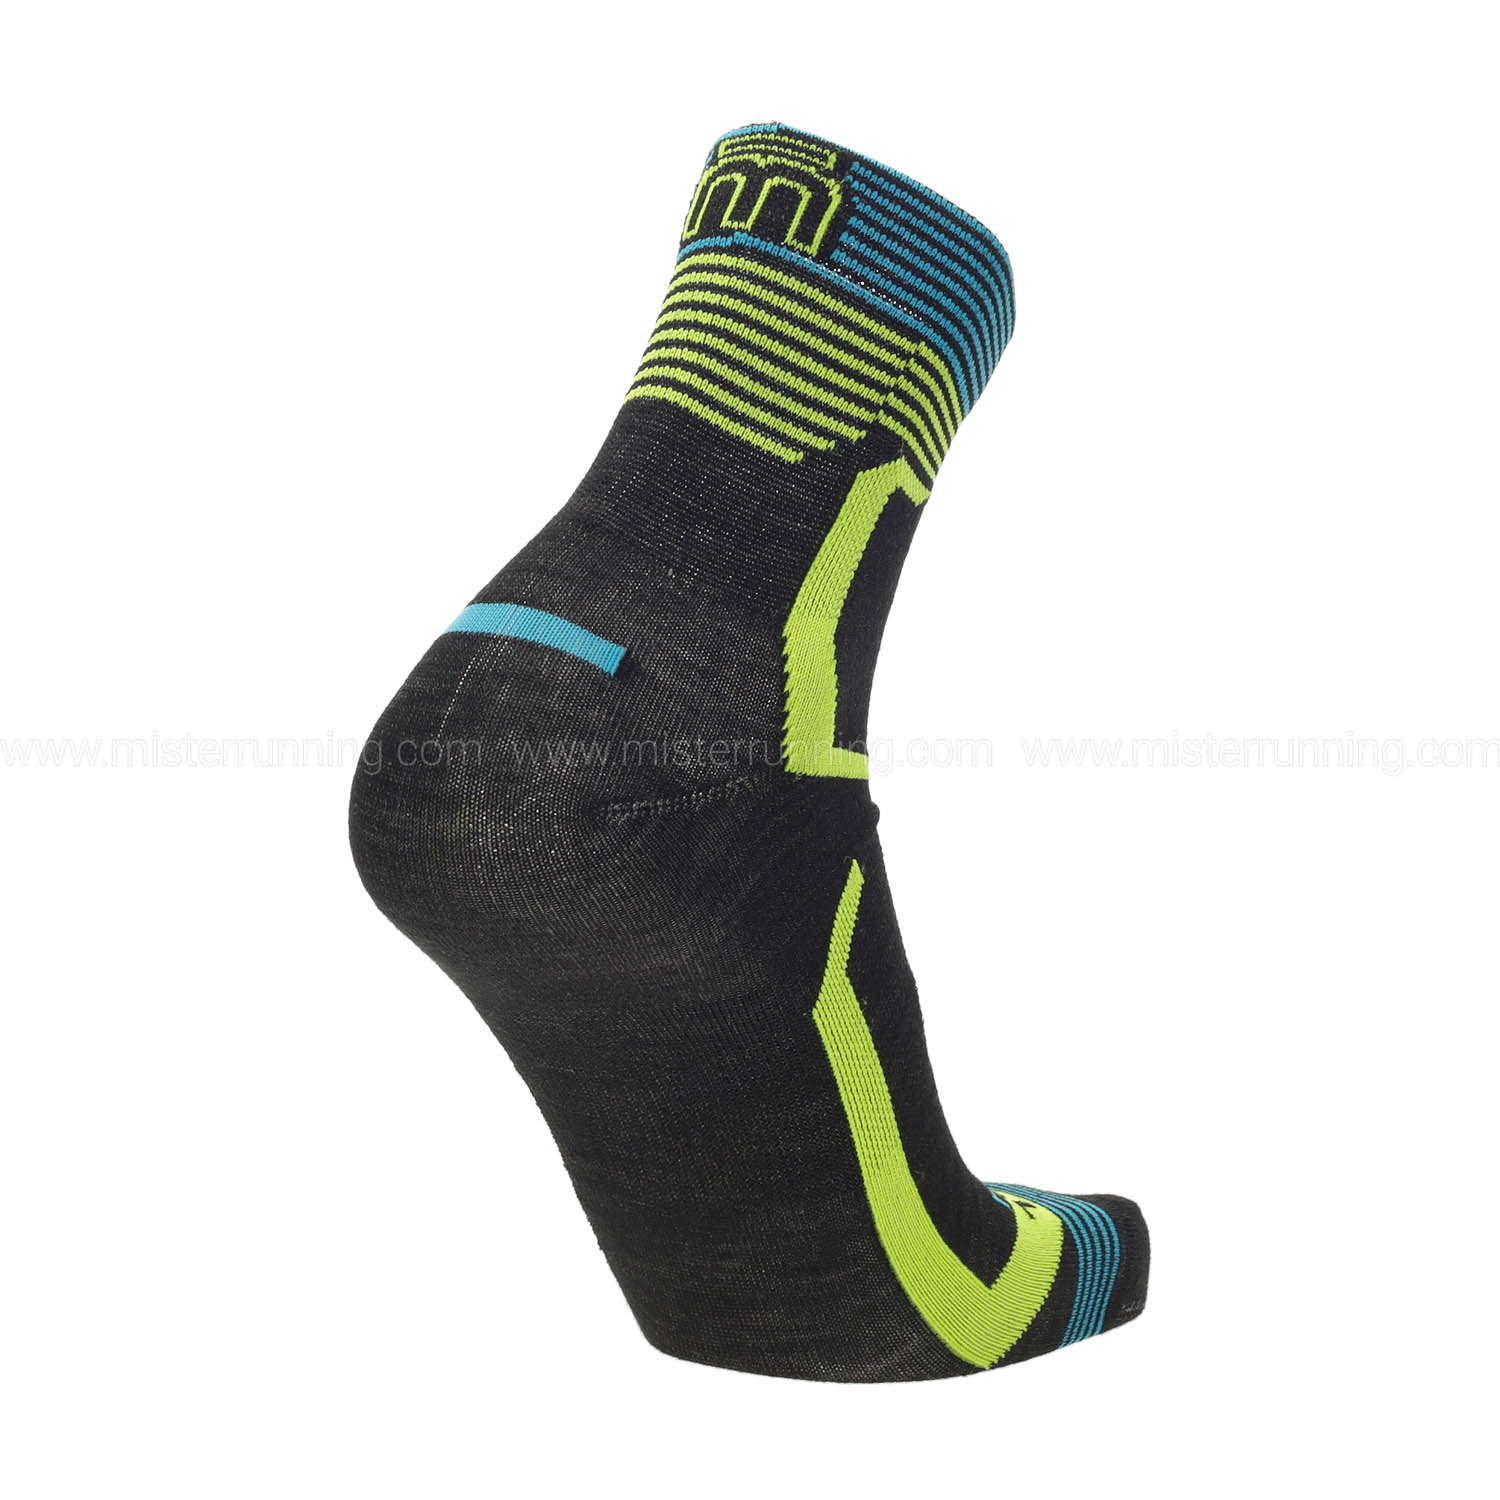 Mico Warm Control Merino Light Weight Socks - Nero/Giallo Fluo